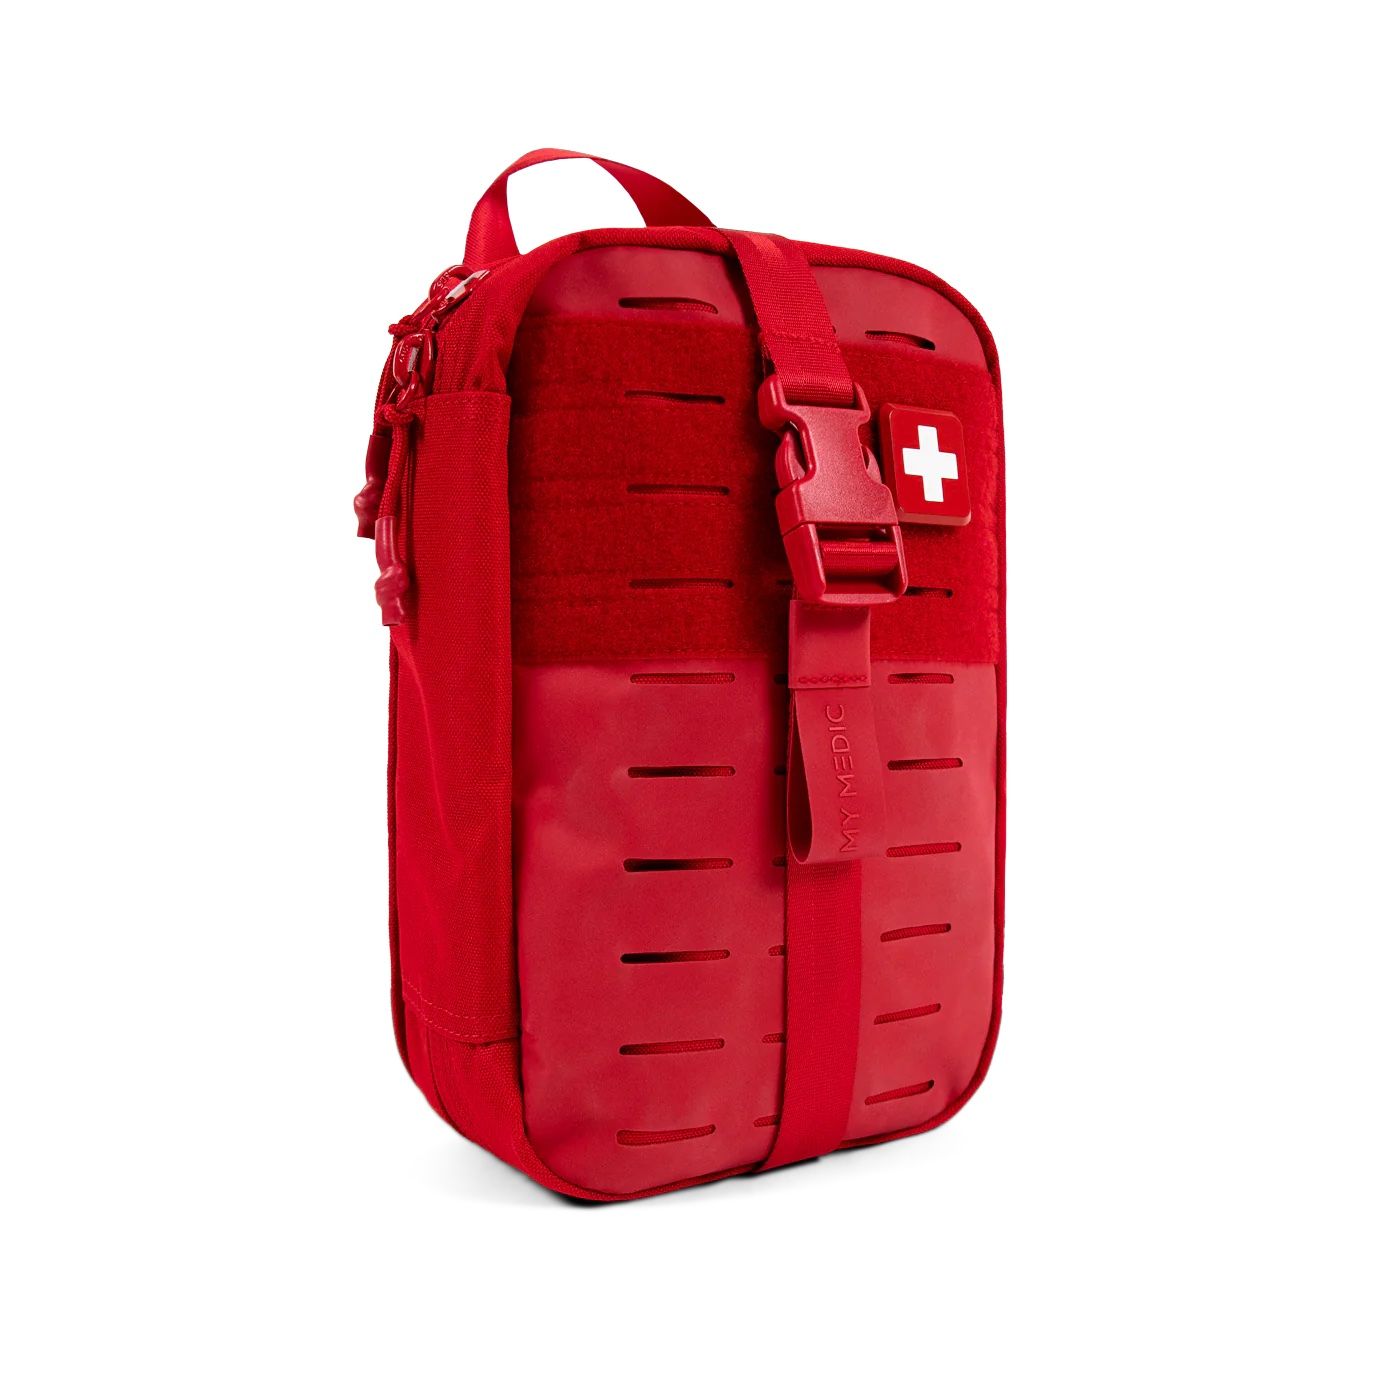 My Medic - MYFAK STANDARD First Aid Kit  - Red